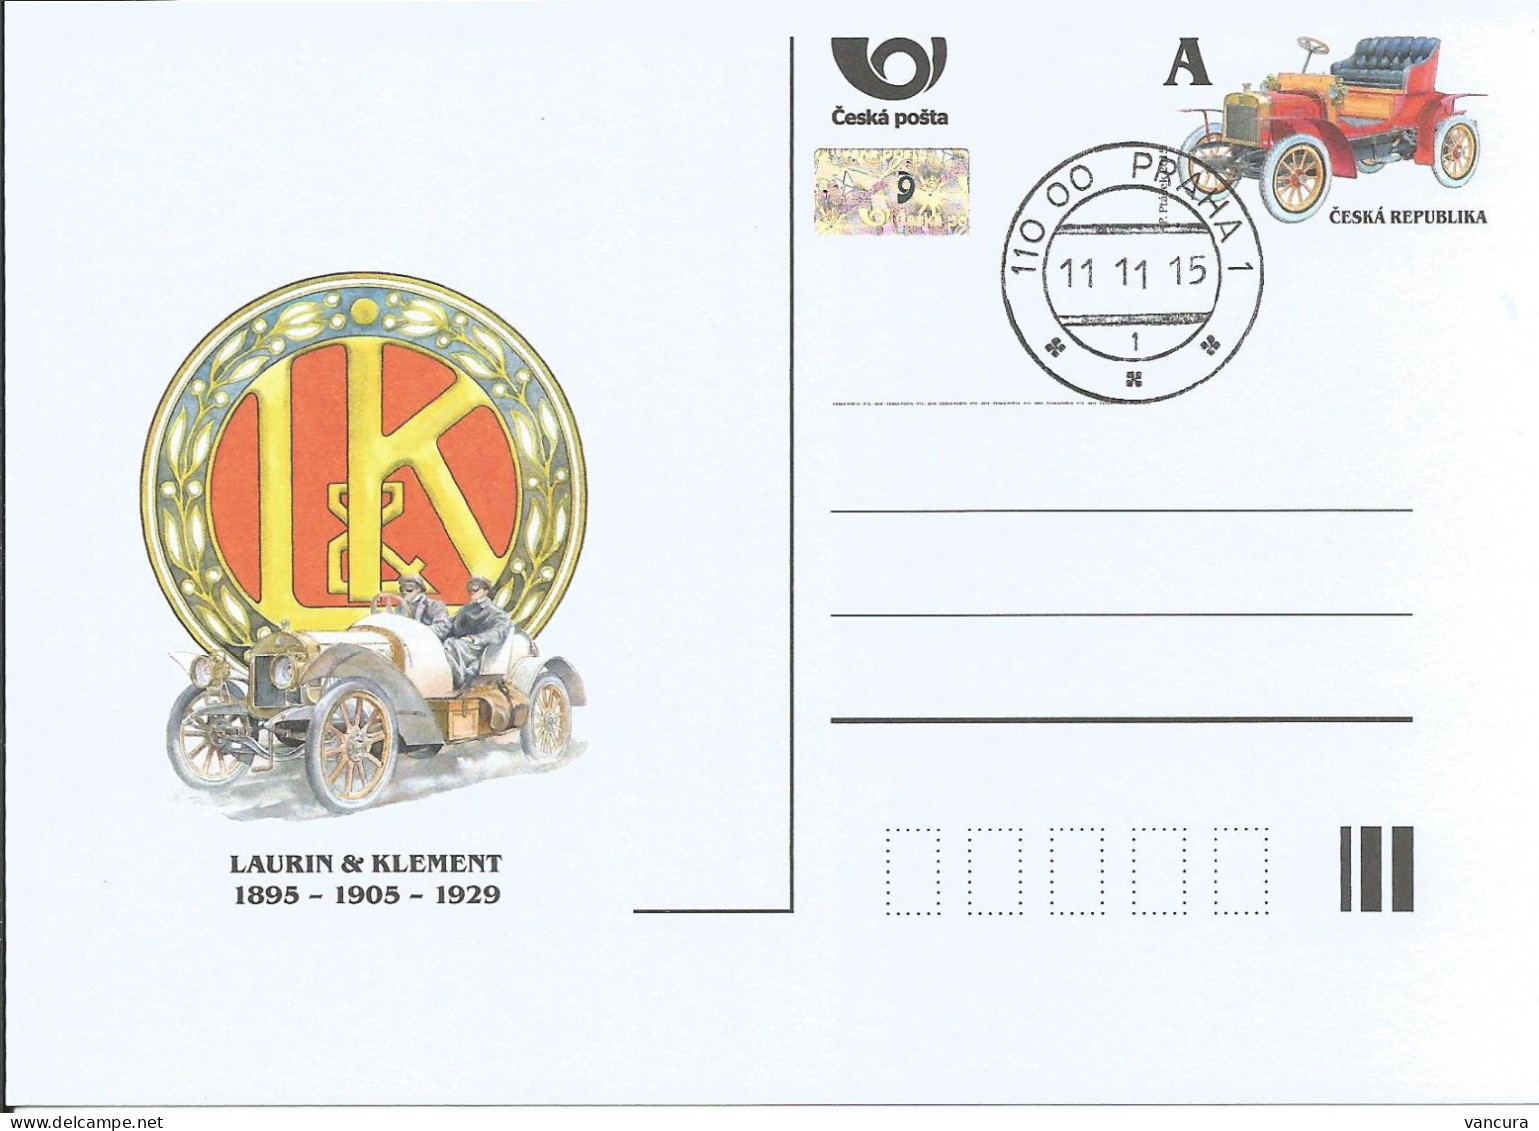 CDV 171 Czech Republic Laurin And Klement Cars 2015 - Postcards